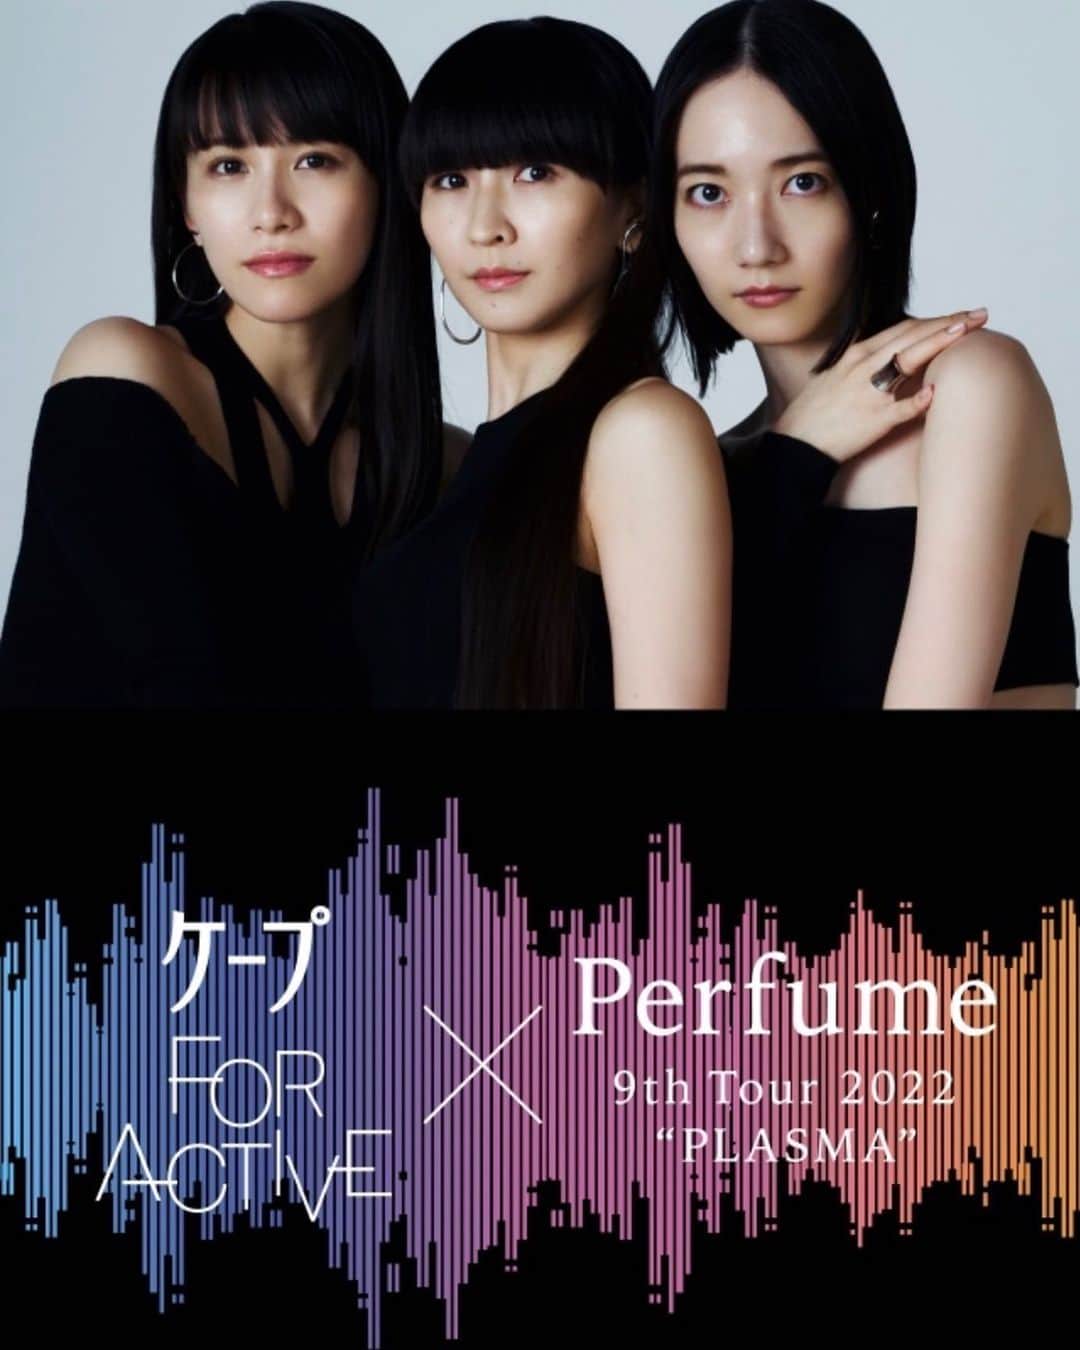 Perfumeのインスタグラム